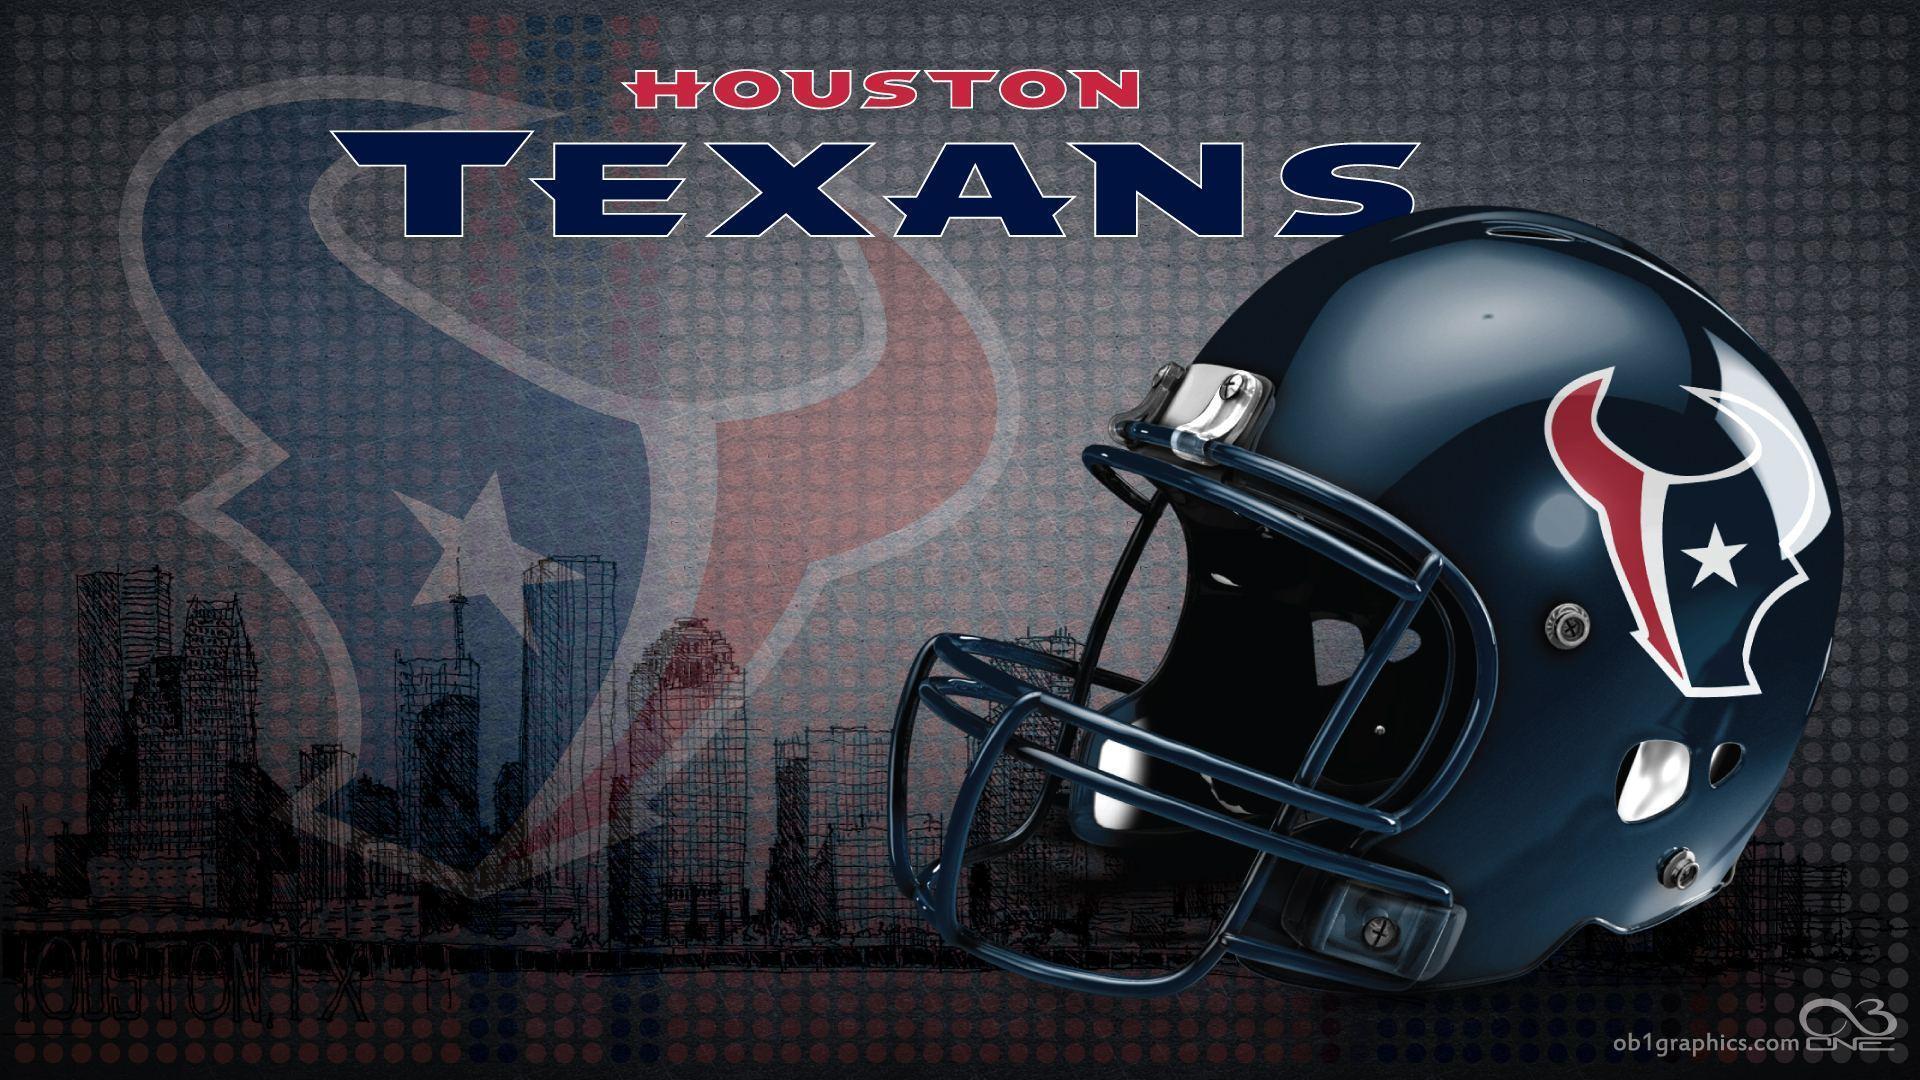 Houston Texans wallpaper HD free download